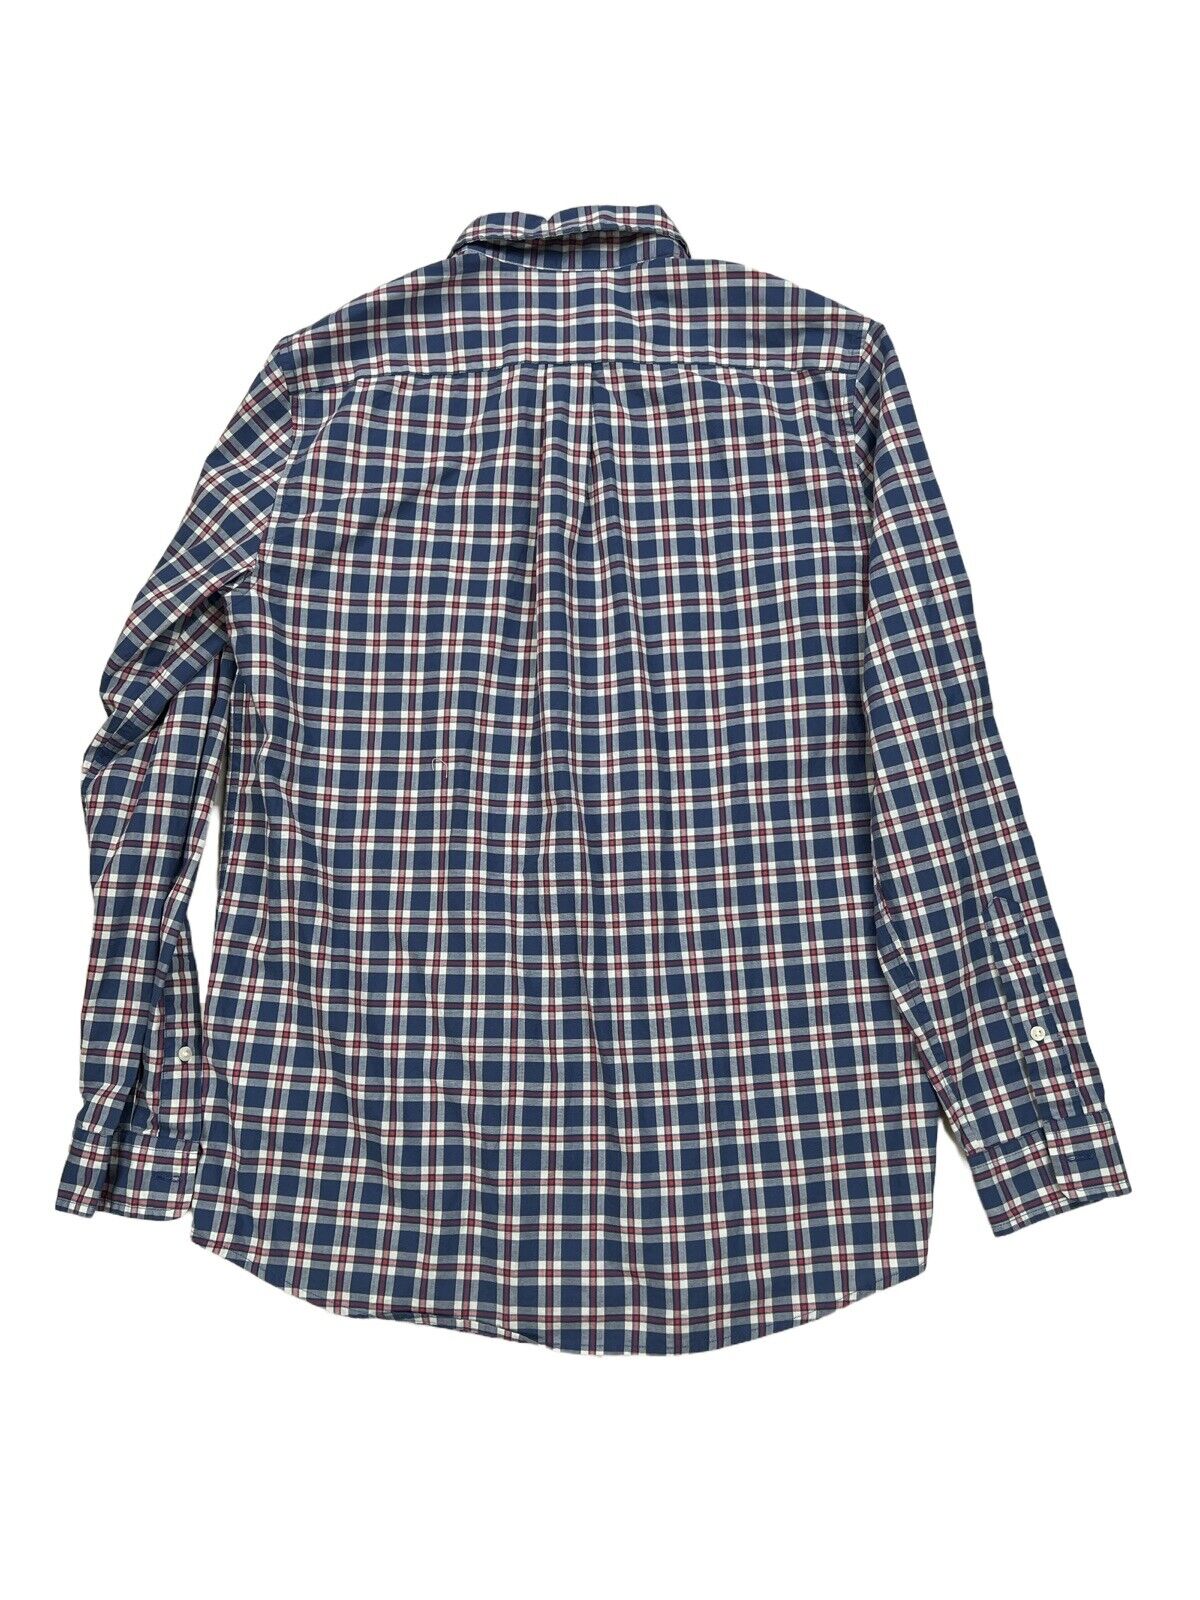 Vineyard Vines Kids Boys Blue Plaid Button Down Shirt - XL 18